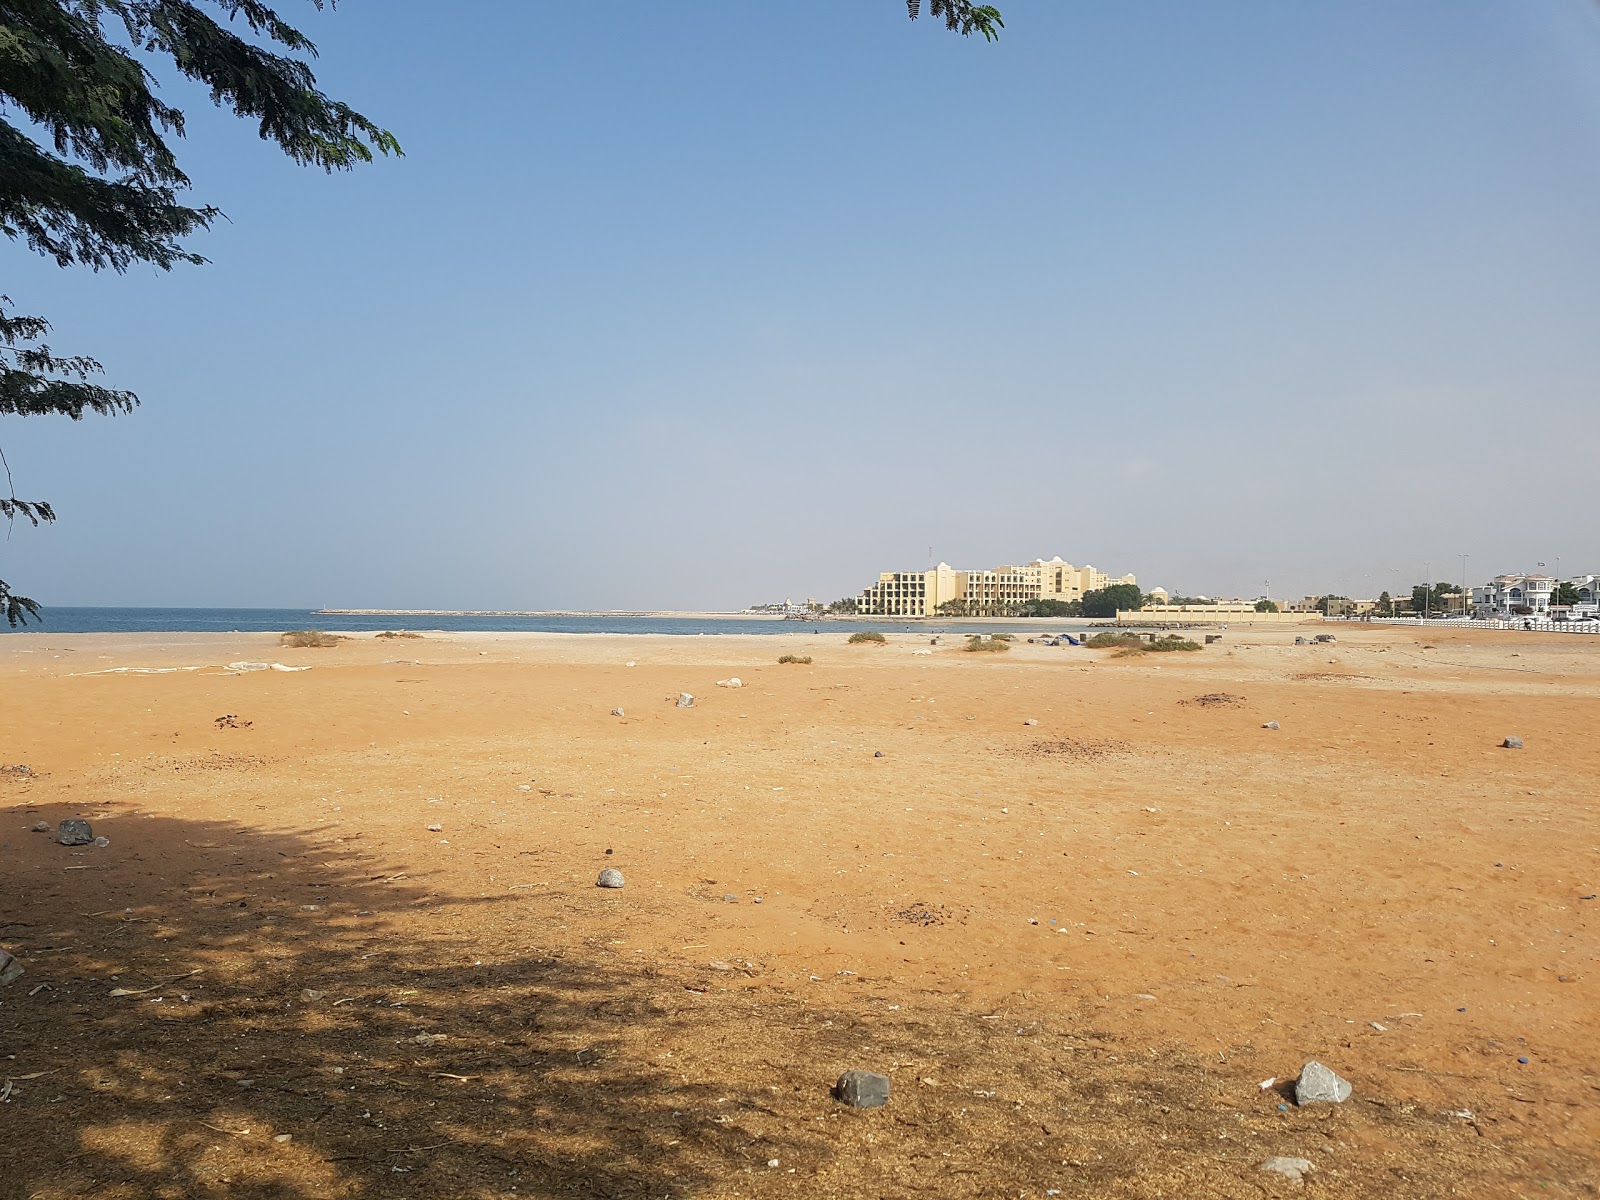 Fotografie cu Rak beach cu nivelul de curățenie in medie